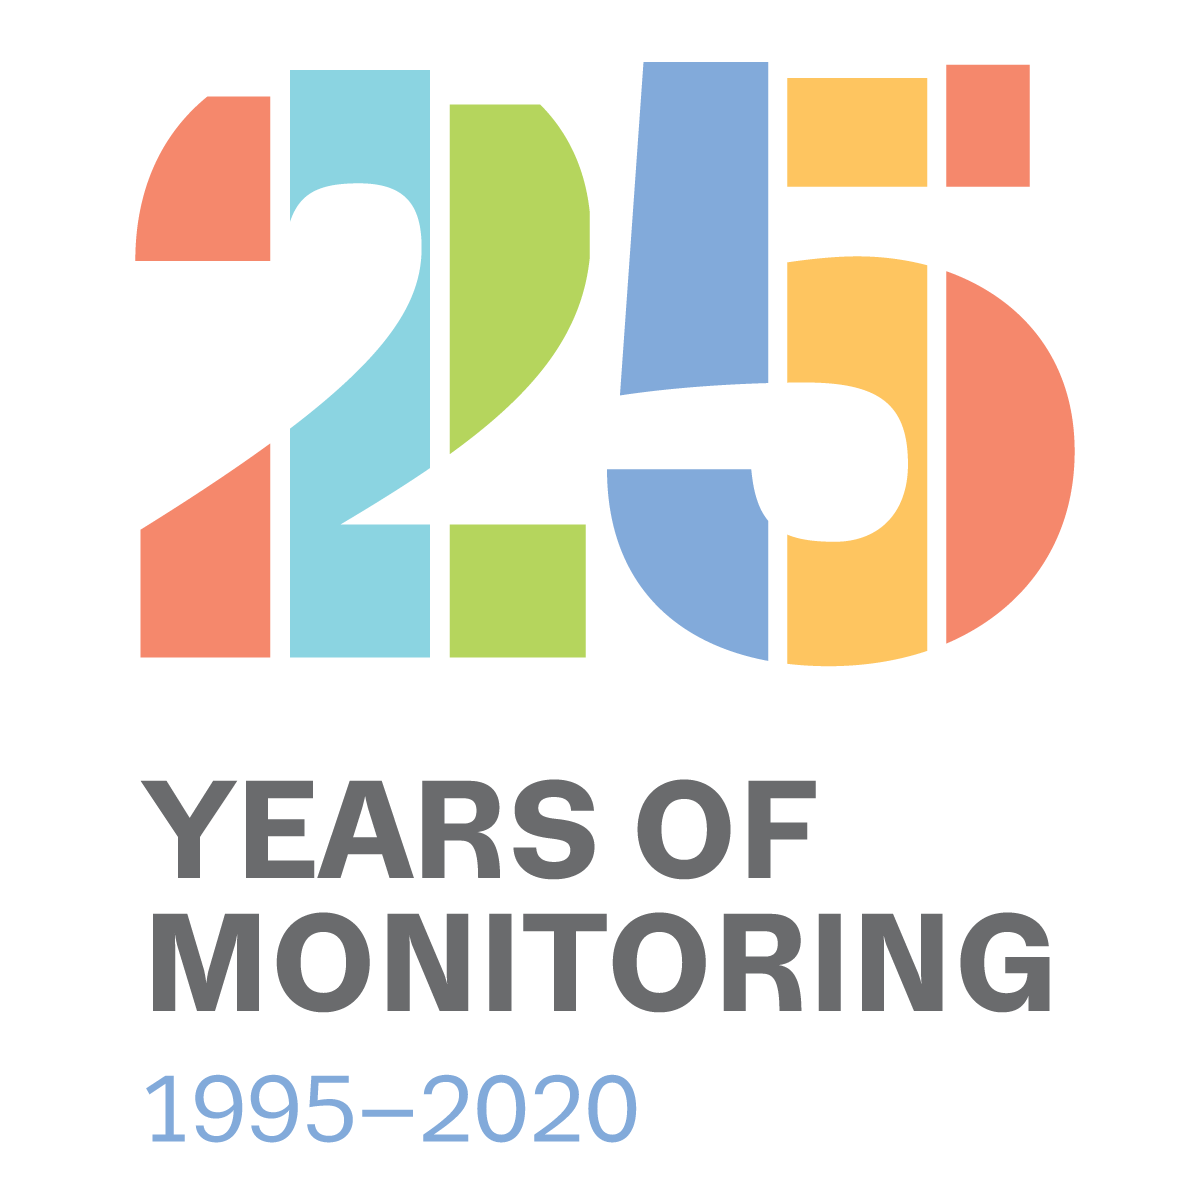 25 year of drug monitoring (1995-2020)